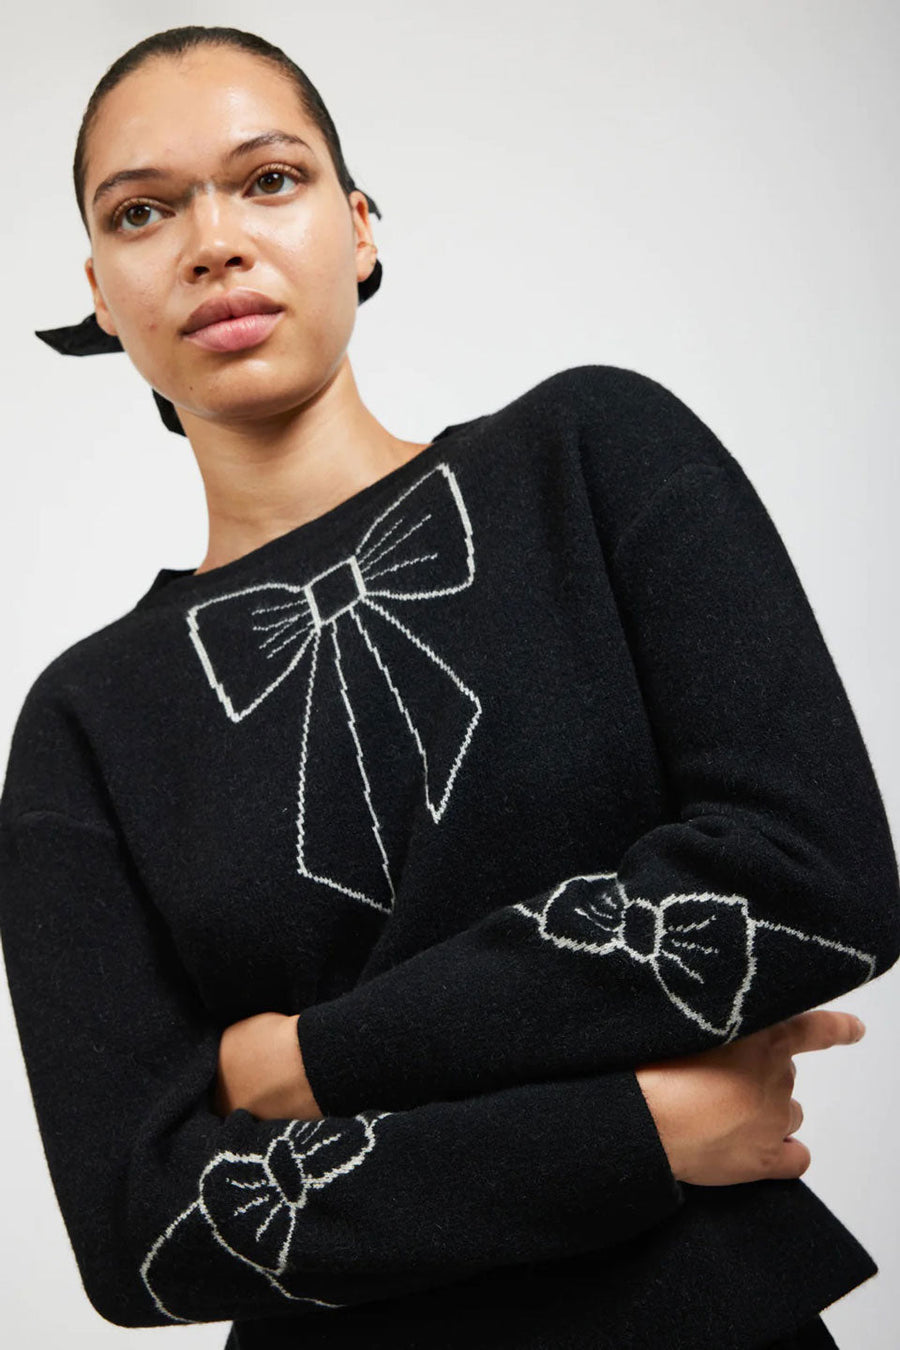 batsheva bow jacquard sweater black